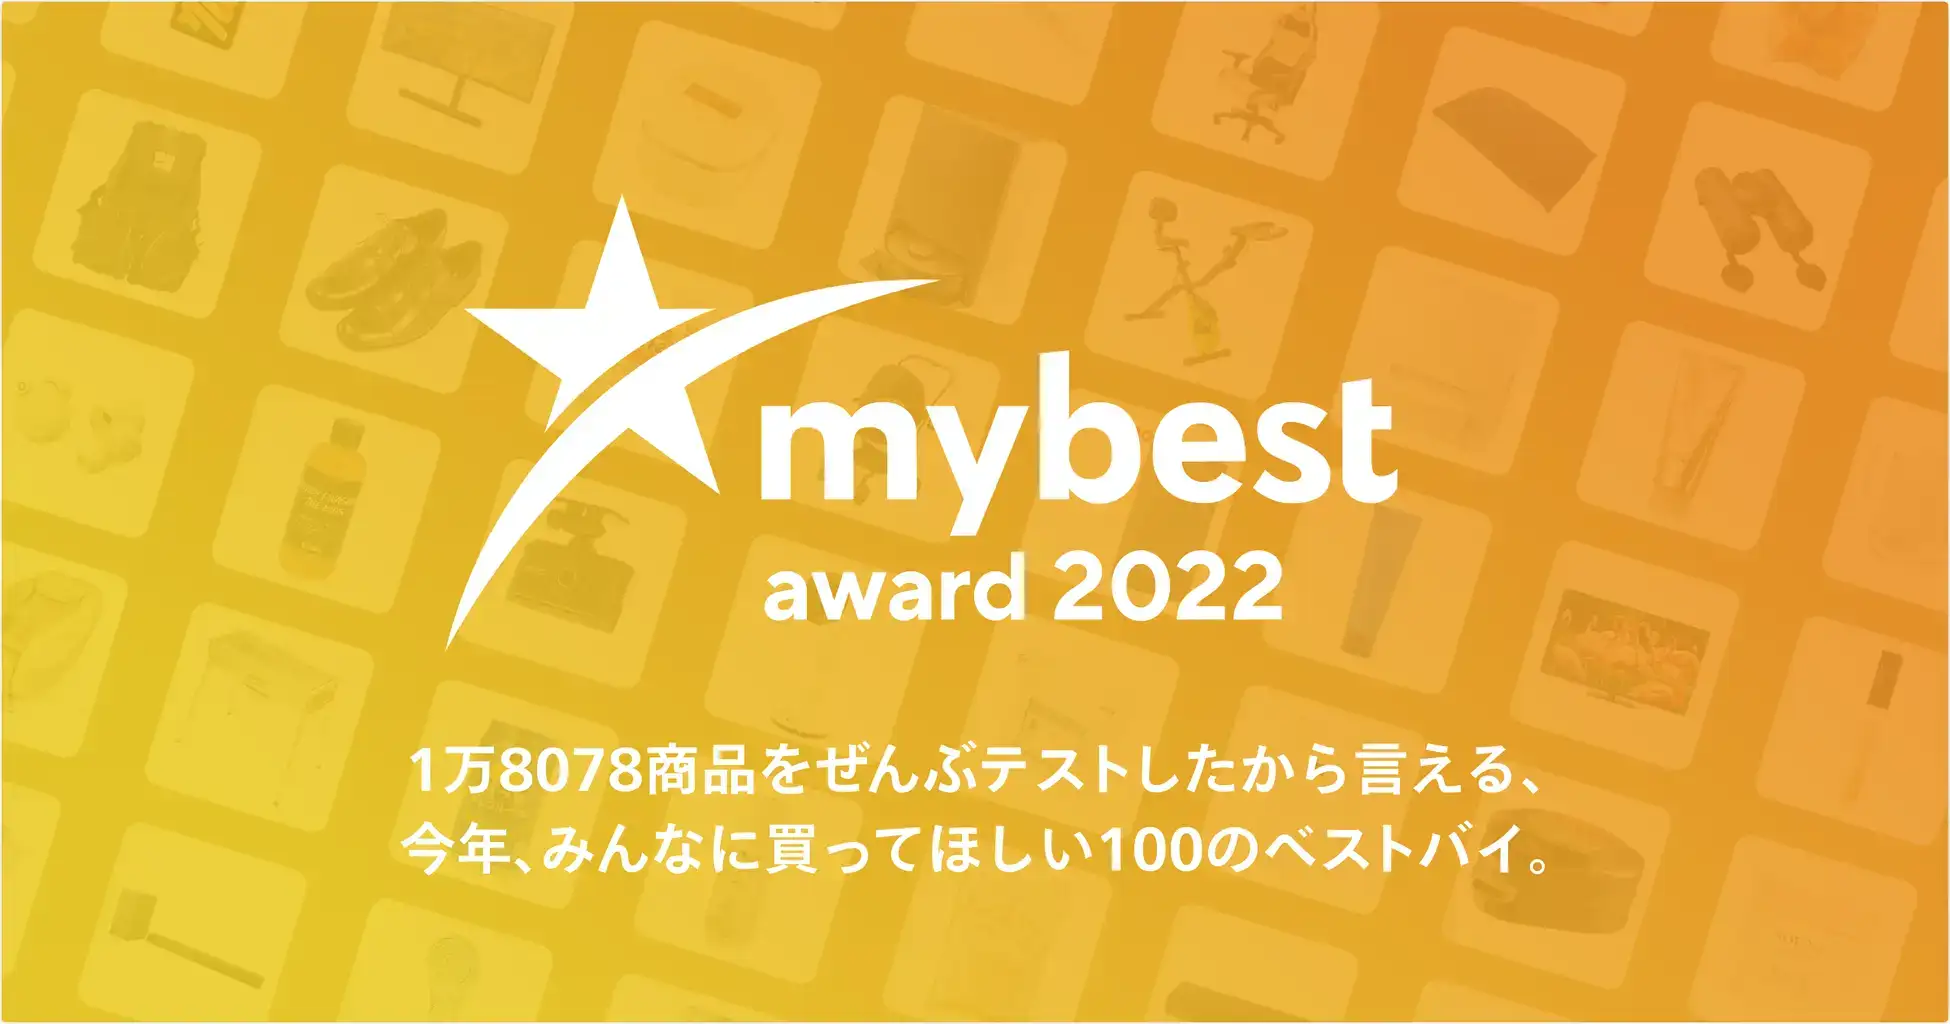 「mybest award 2022」